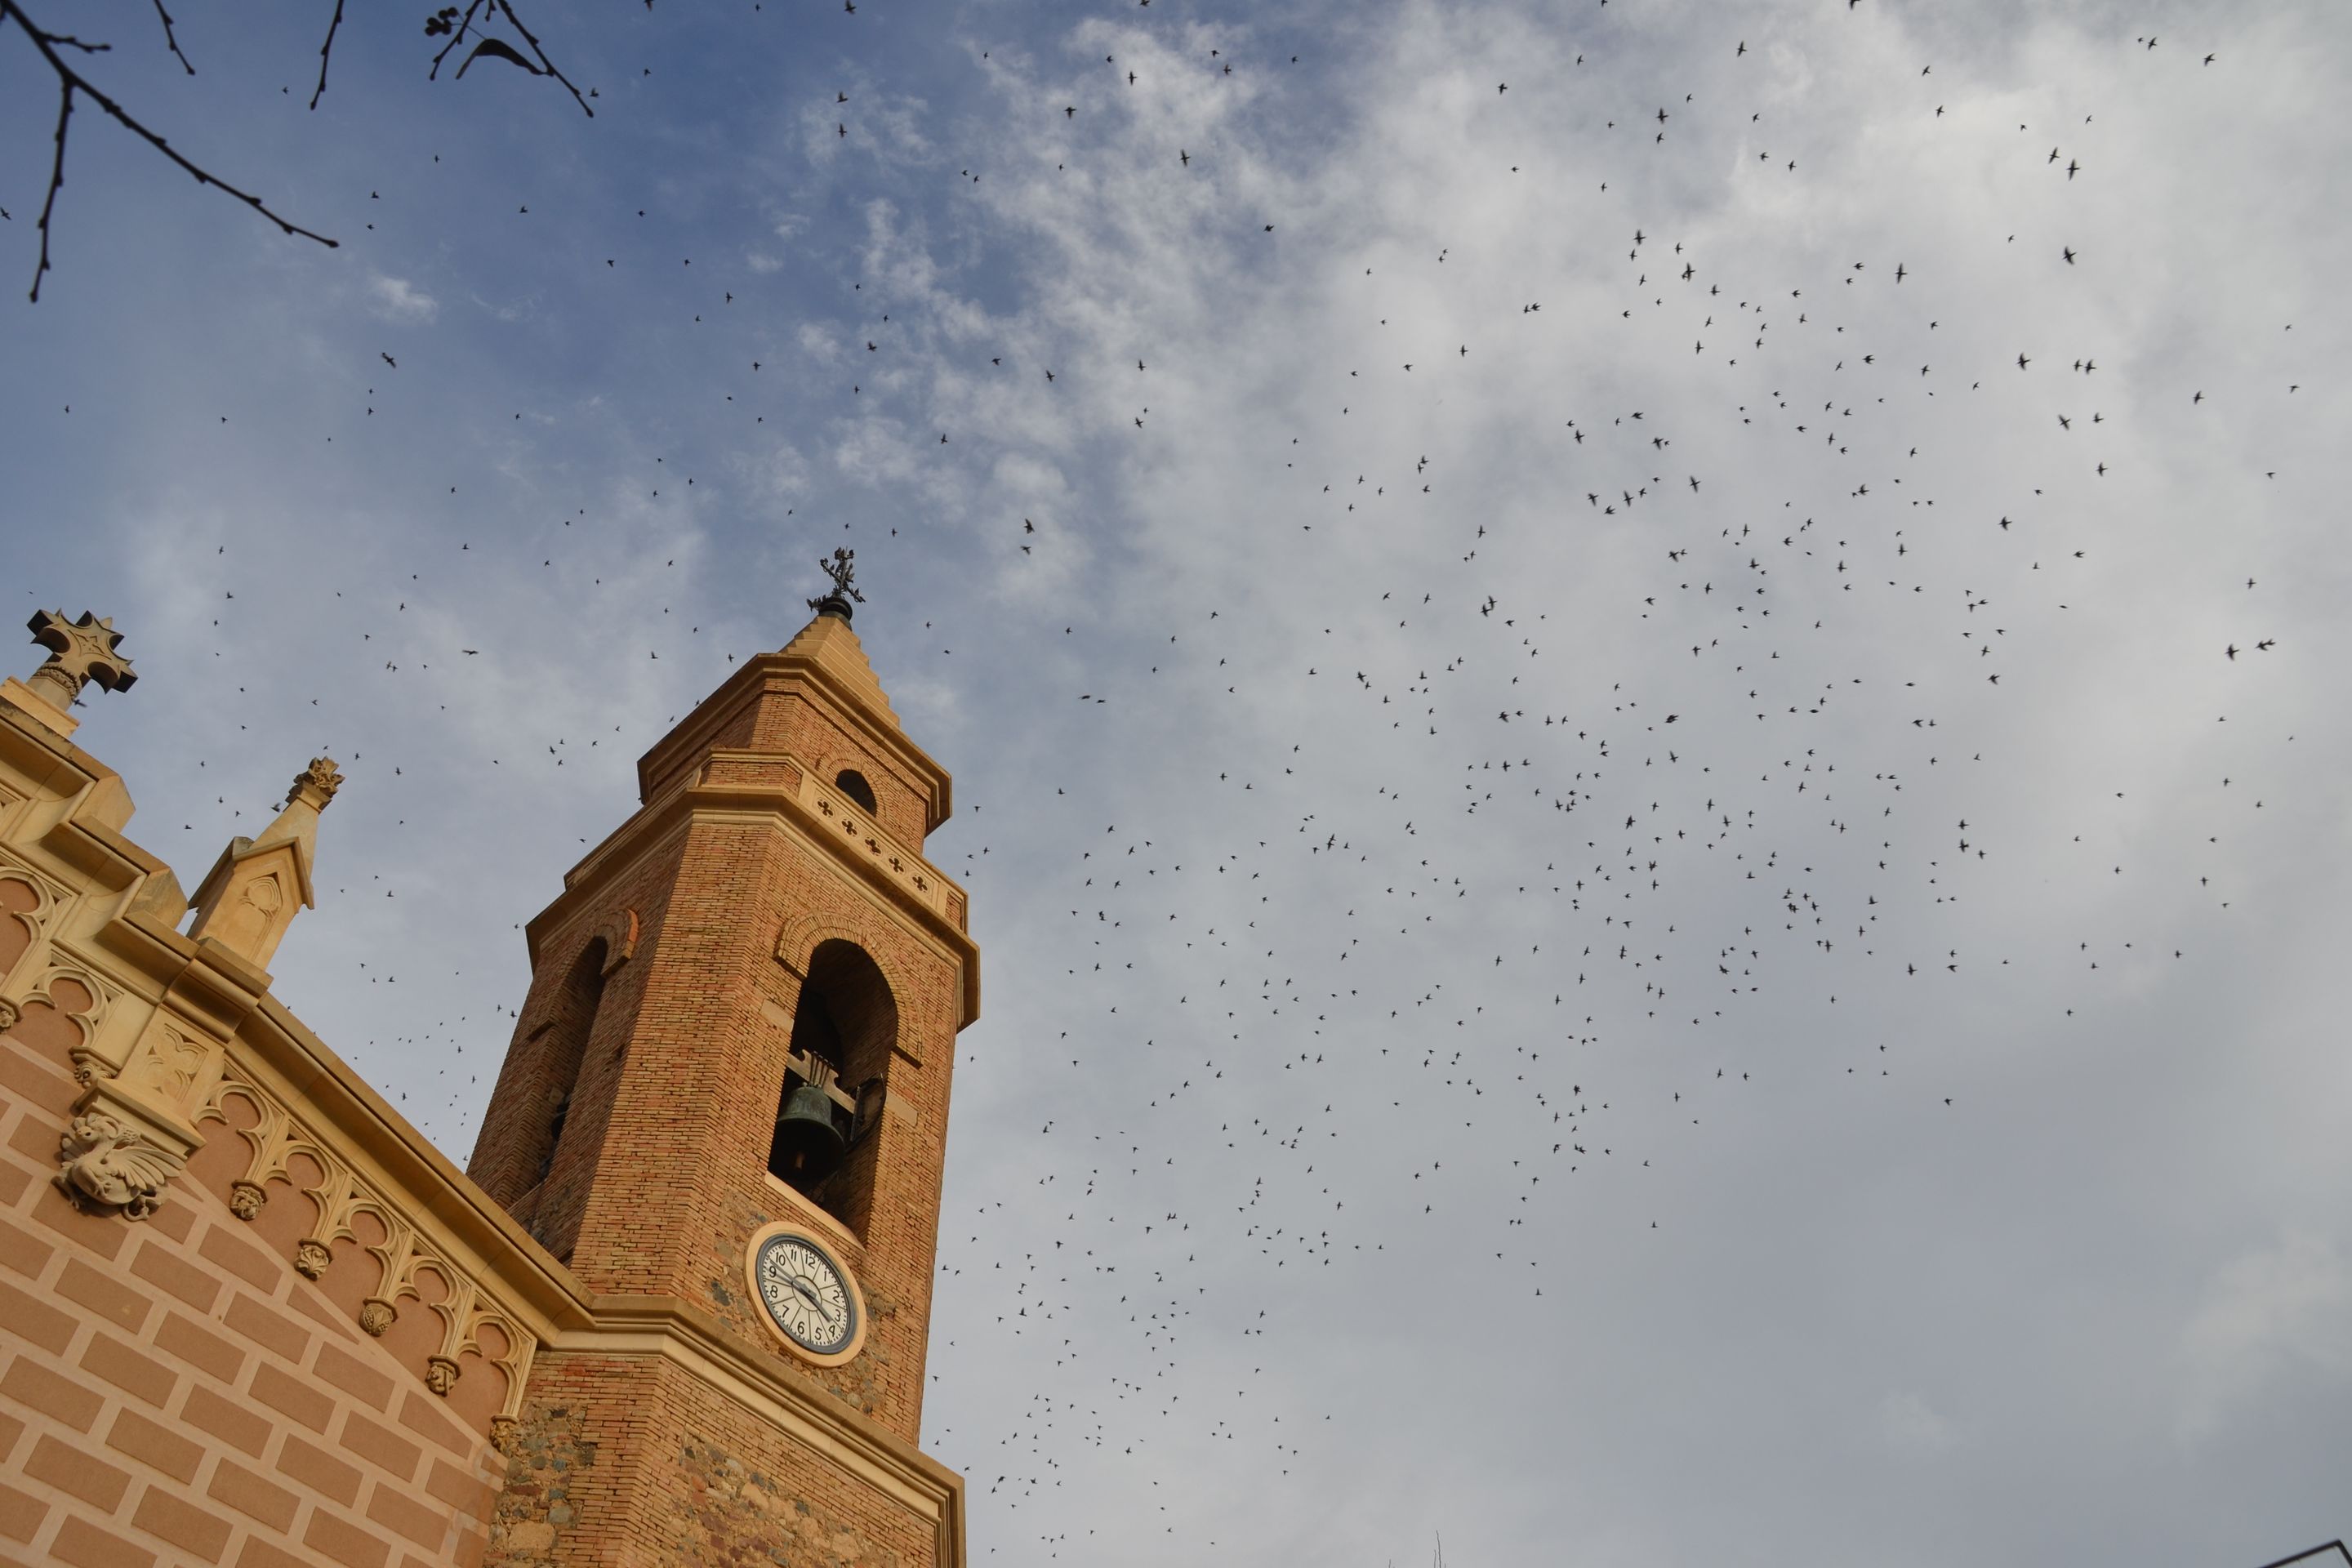 Vögel über dem Kirchturm von Cabrils